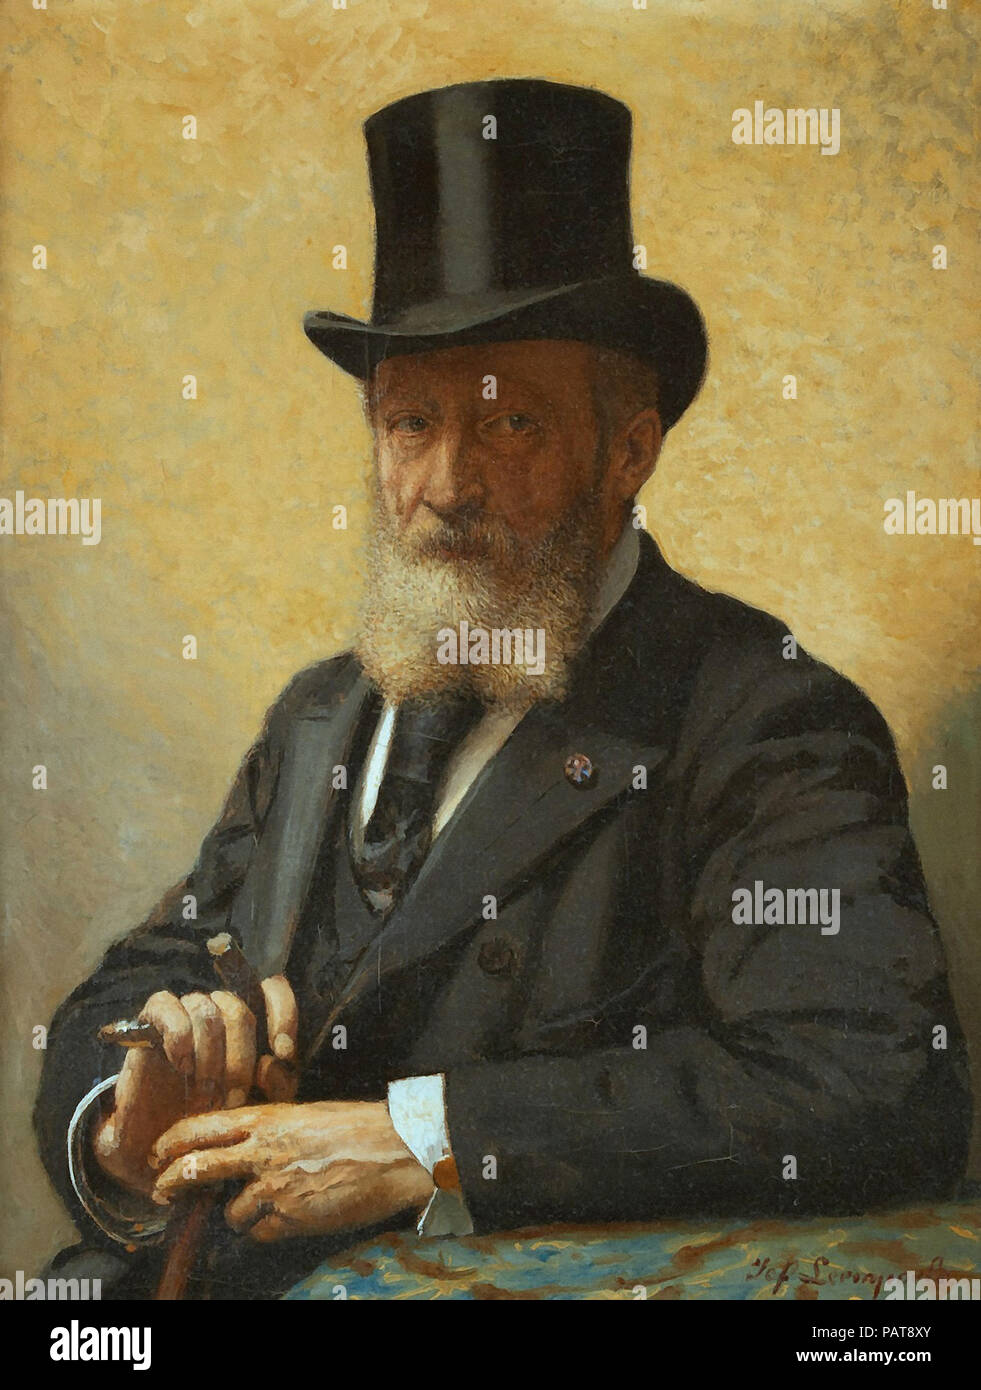 Portret van man met hoed 1910 by Theo van Doesburg Stock Photo - Alamy